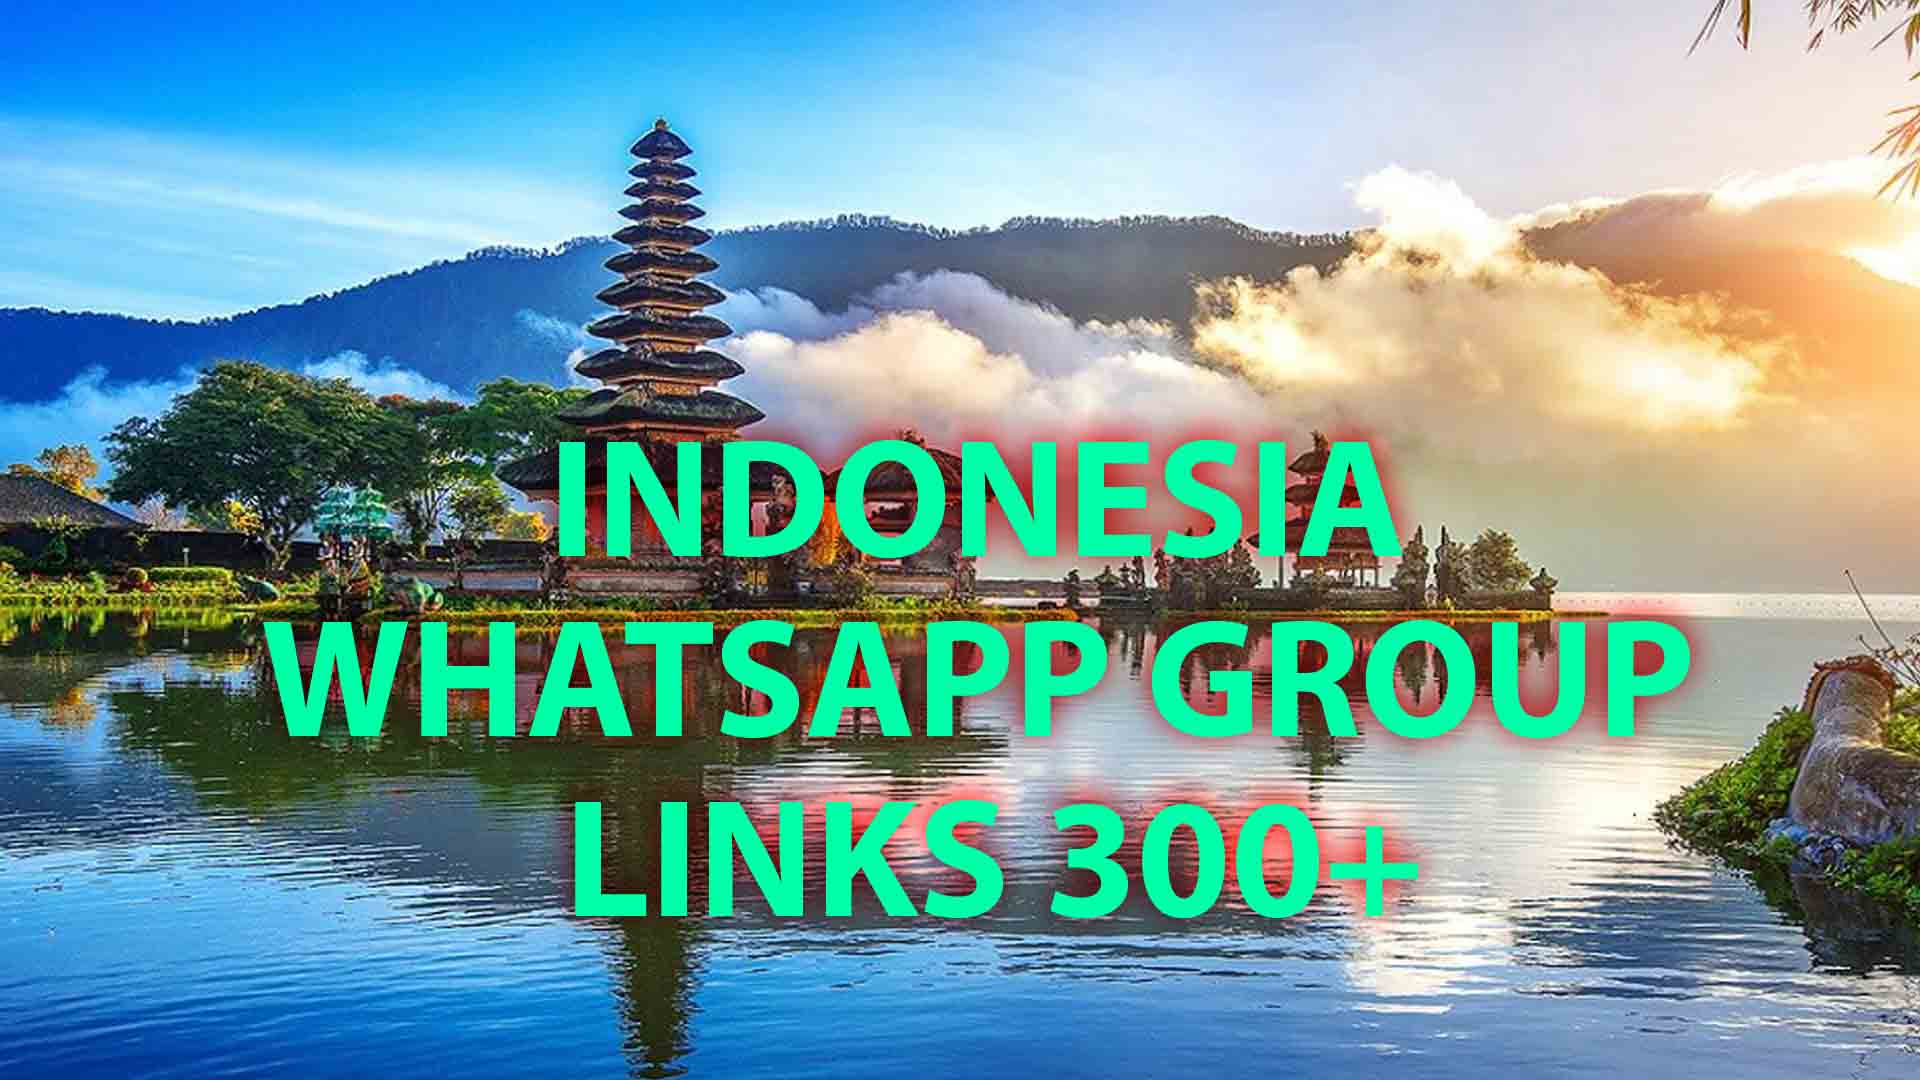 Indonesia whatsapp group Links 300+